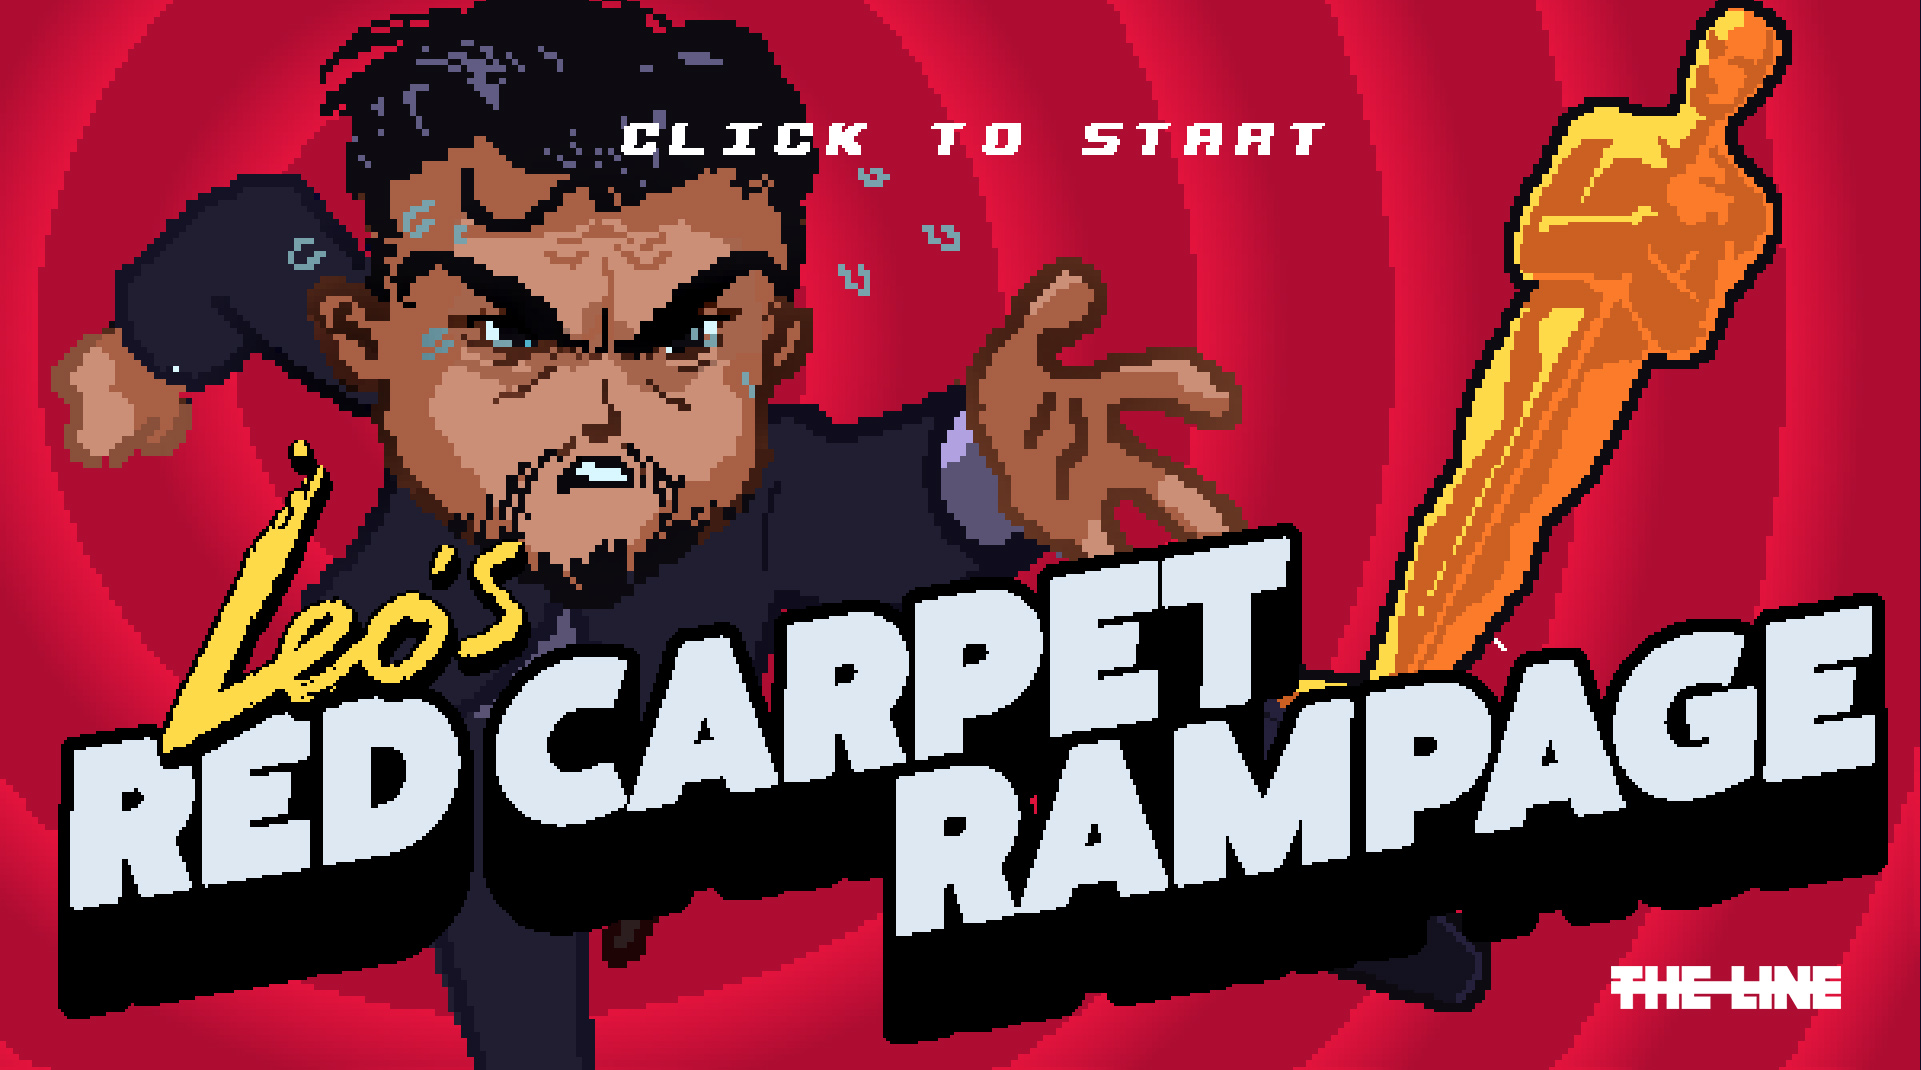 Help Leonardo Dicaprio Get an Oscar in this Videogame